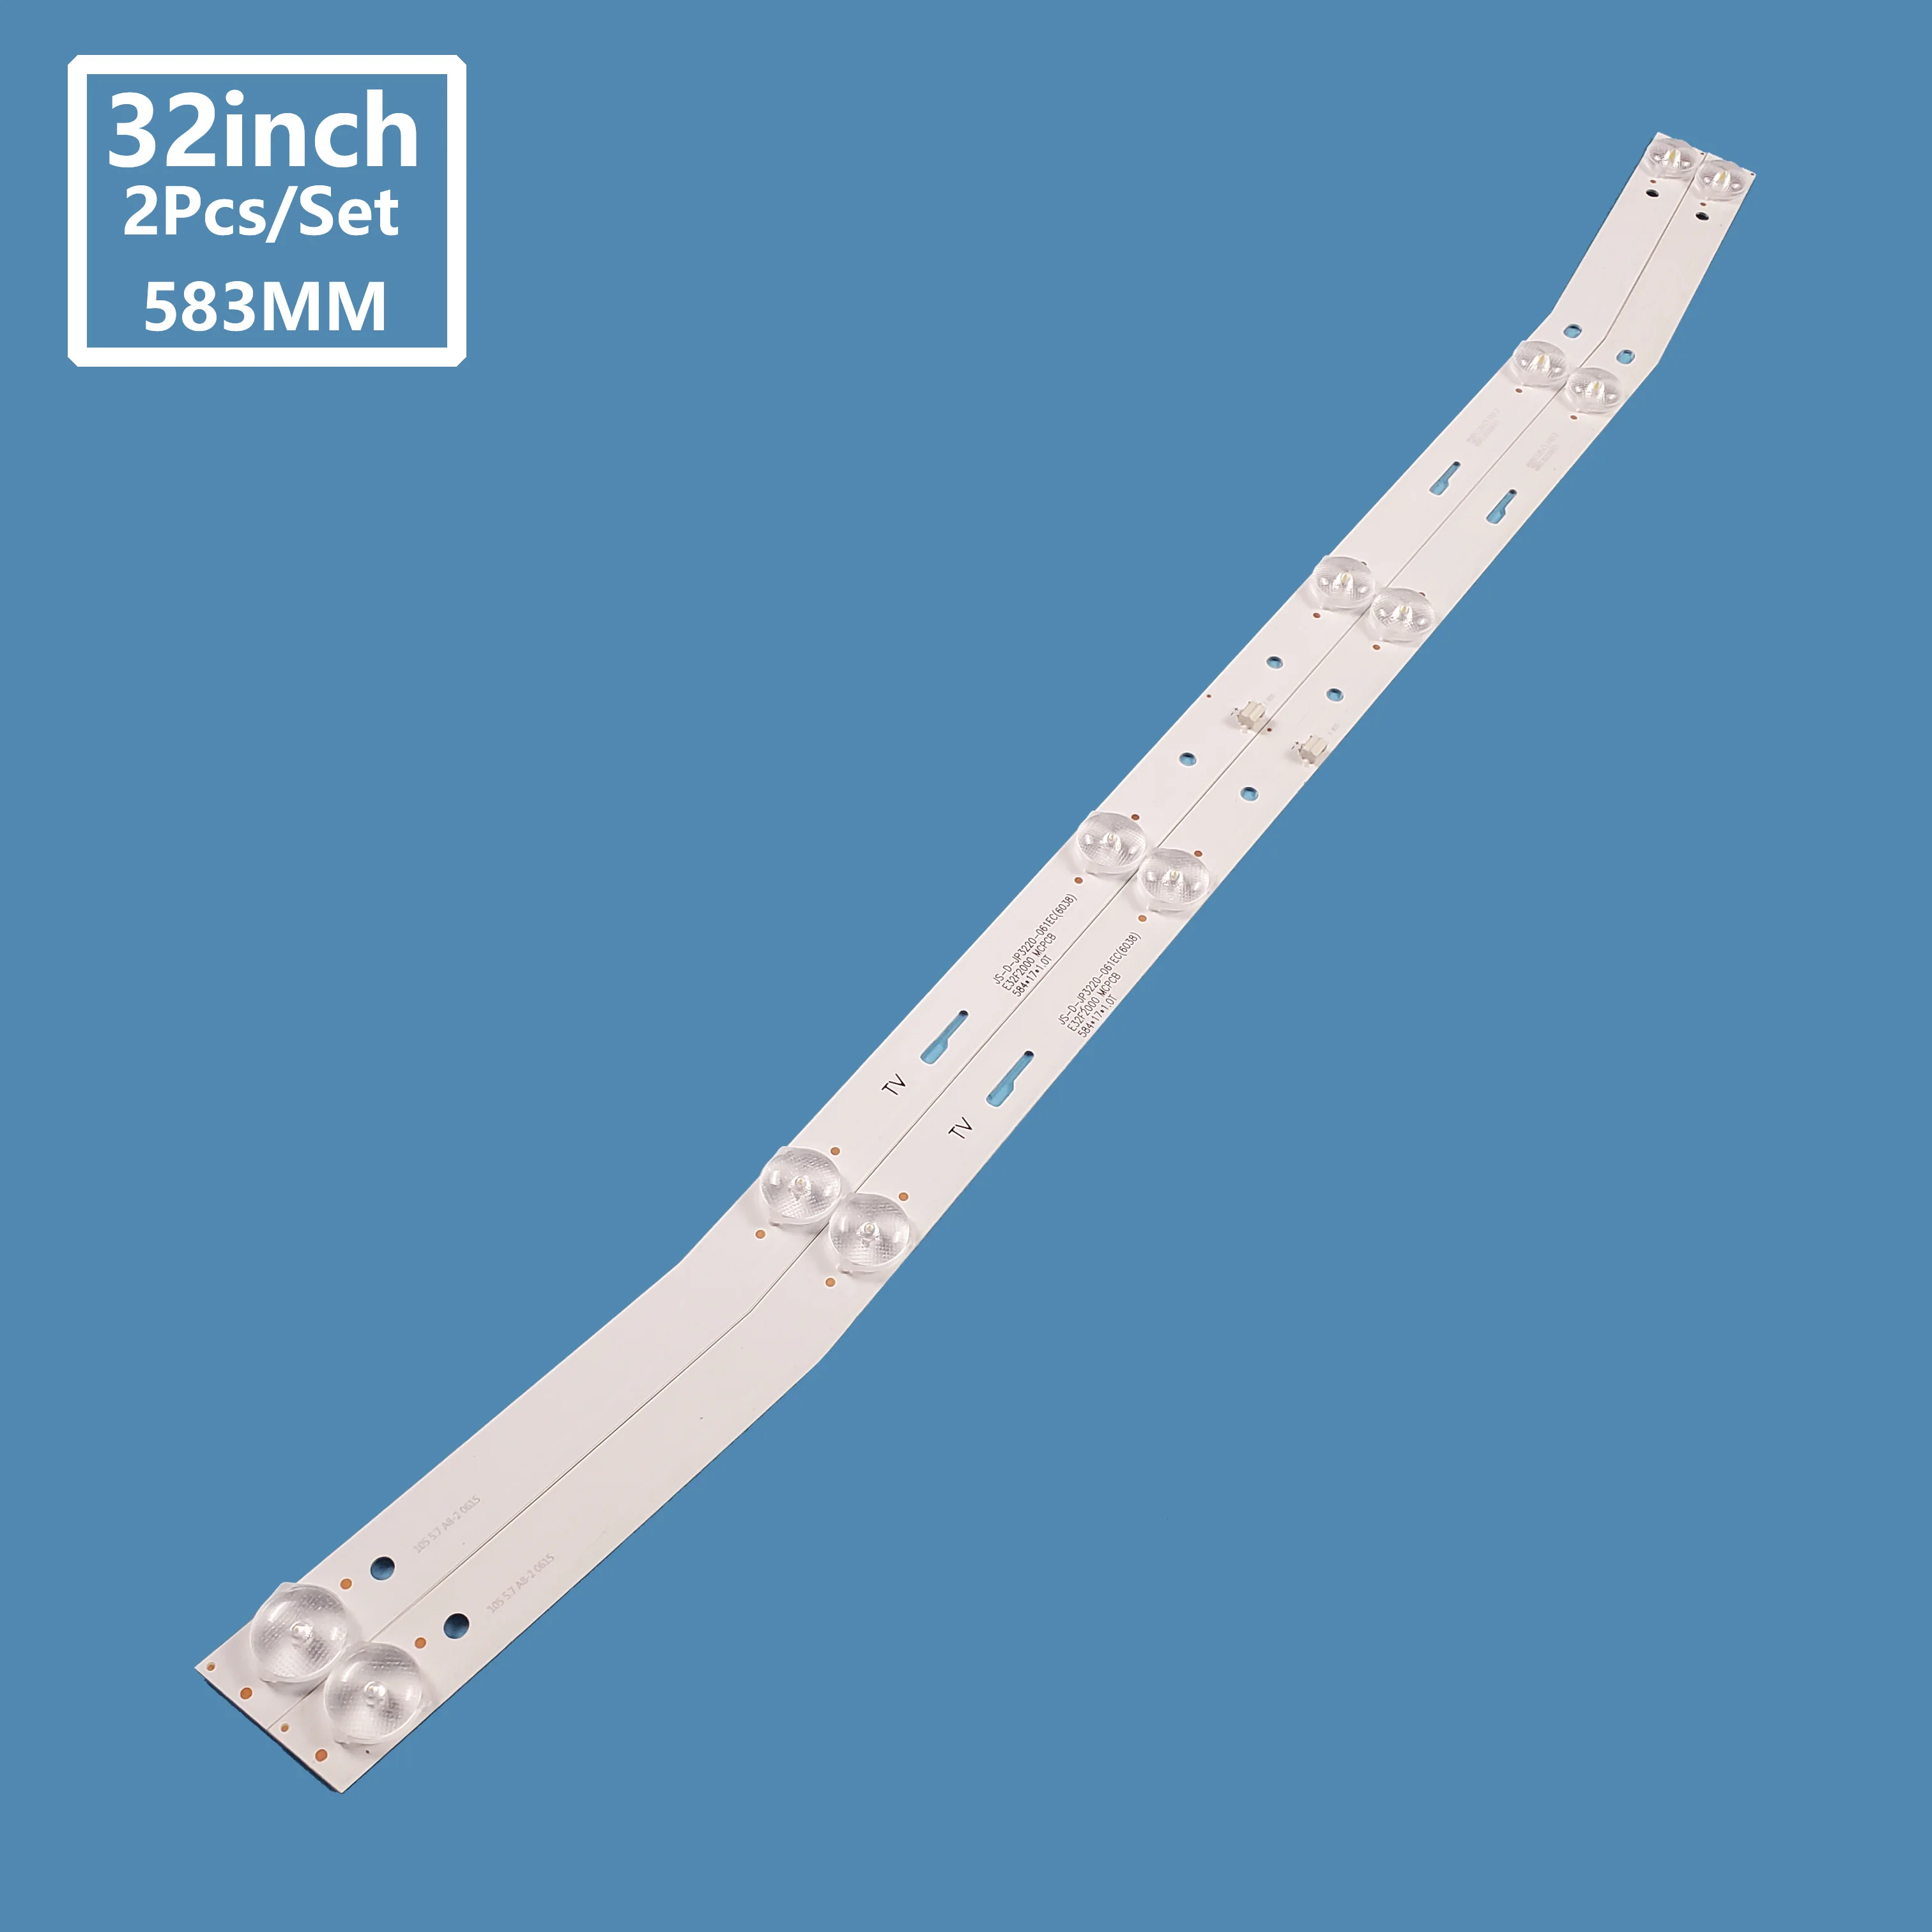 2Pcs/set Smart TV LED Backlight Bar Strip JS-D-JP3220-061EC For 32inch SAST LED32HD340/32X60 LeHua 32L33 32X600T32 32L3 32S1A